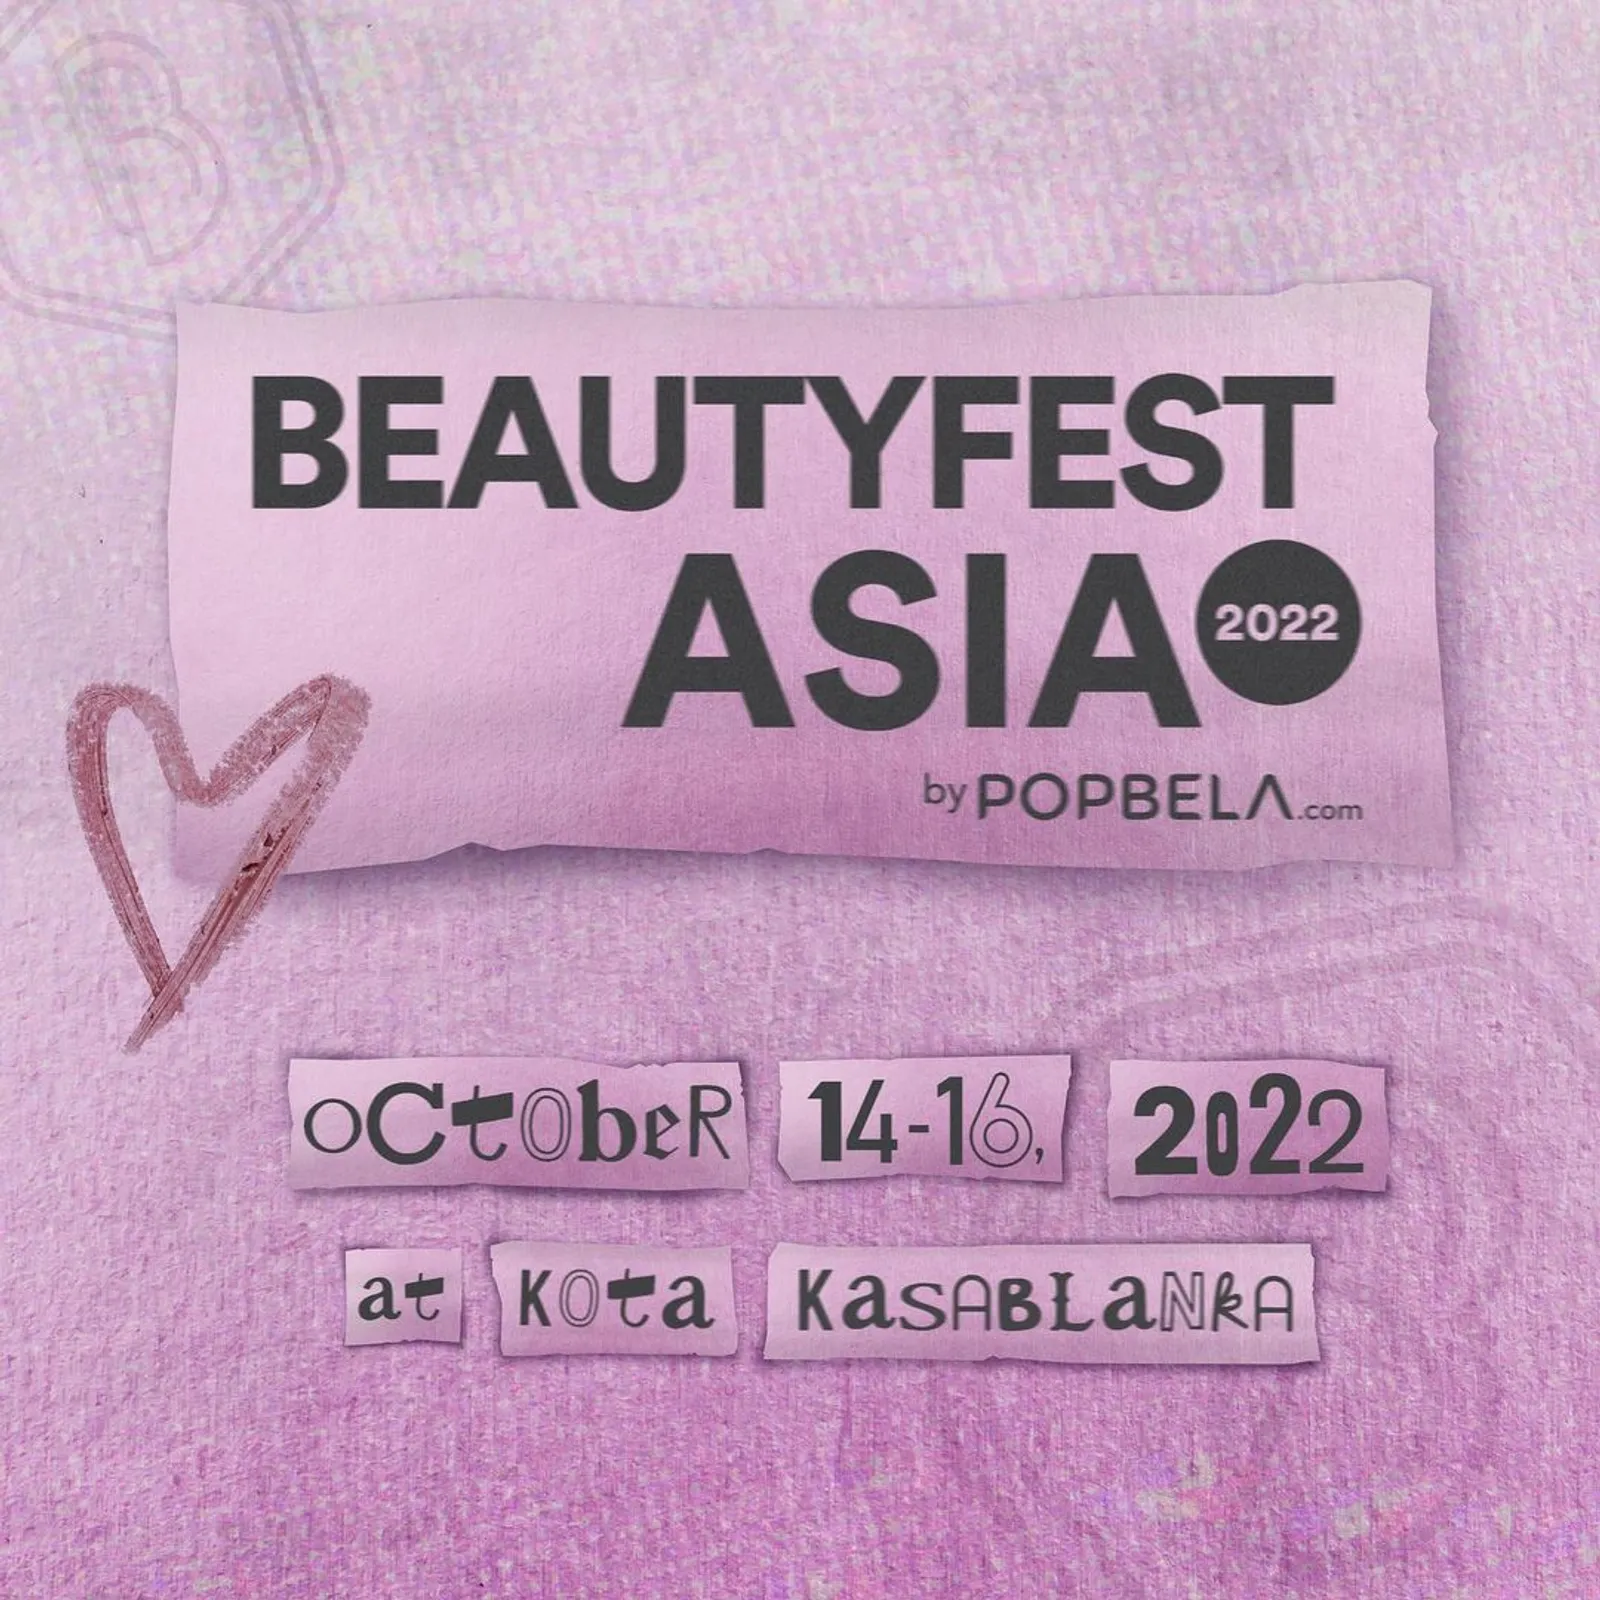 PONY Menyapa Beauty Enthusiast Indonesia di BeautyFest Asia 2022